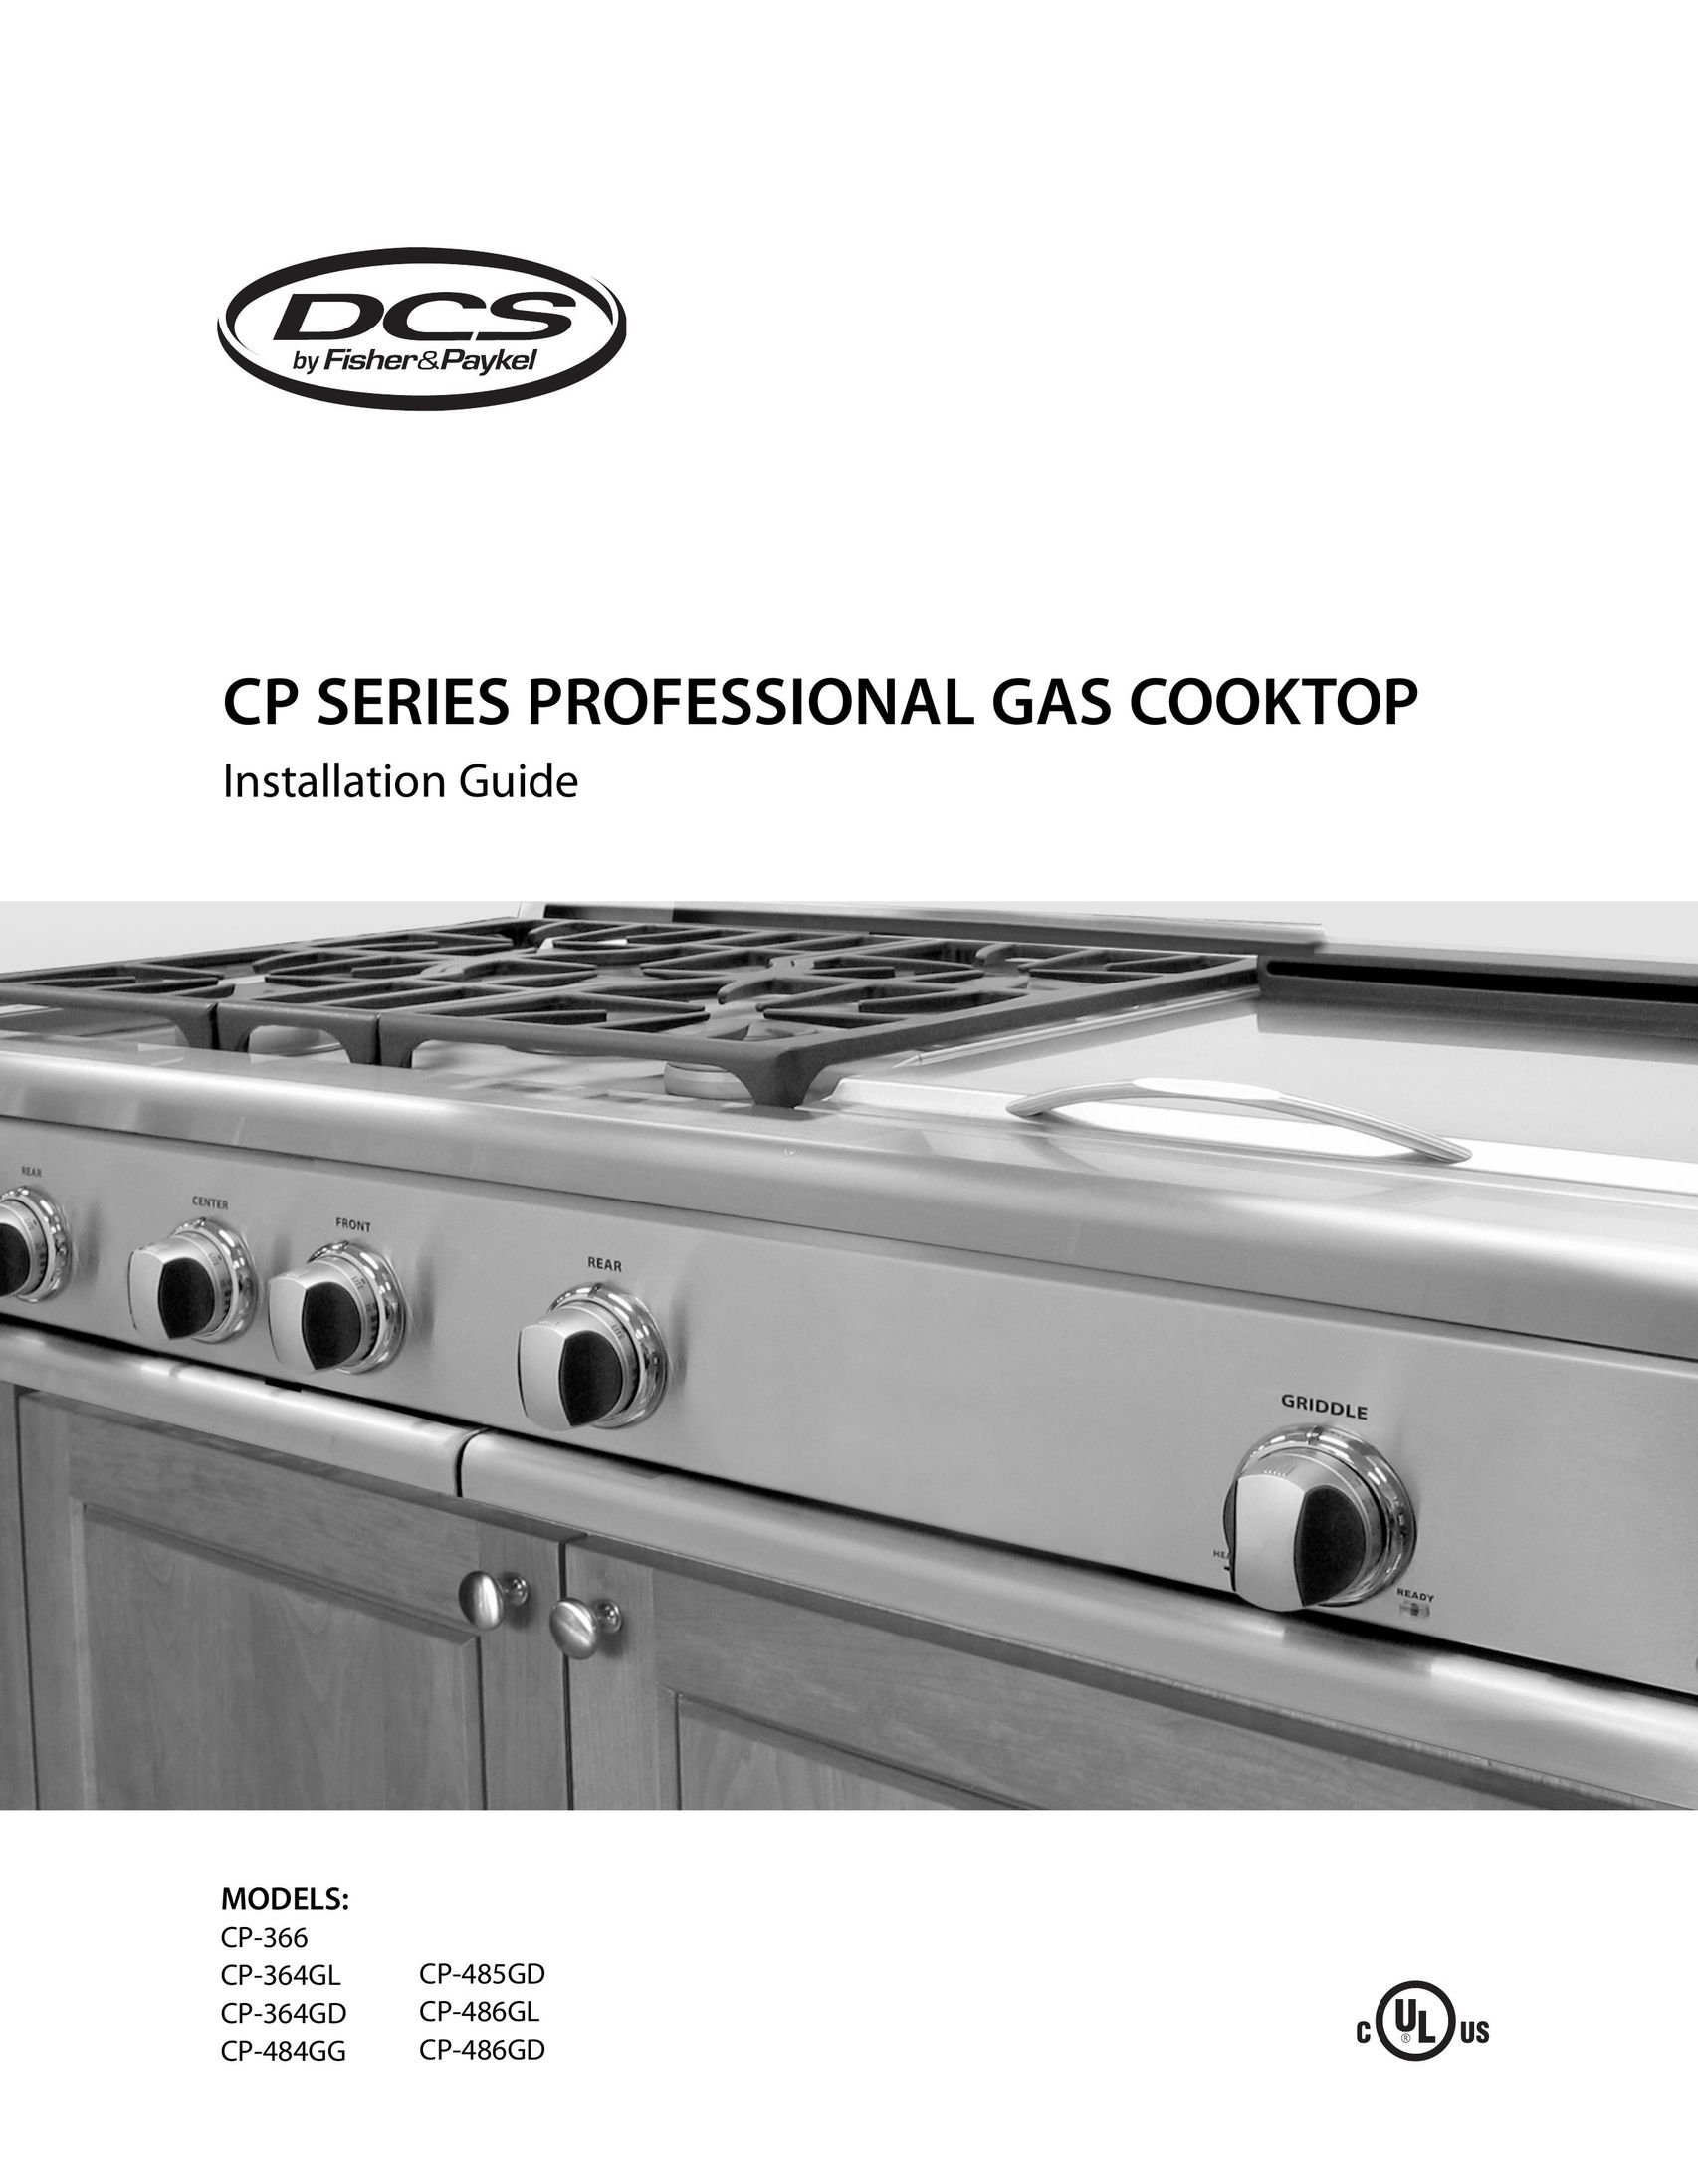 DCS CP-364GL Cooktop User Manual